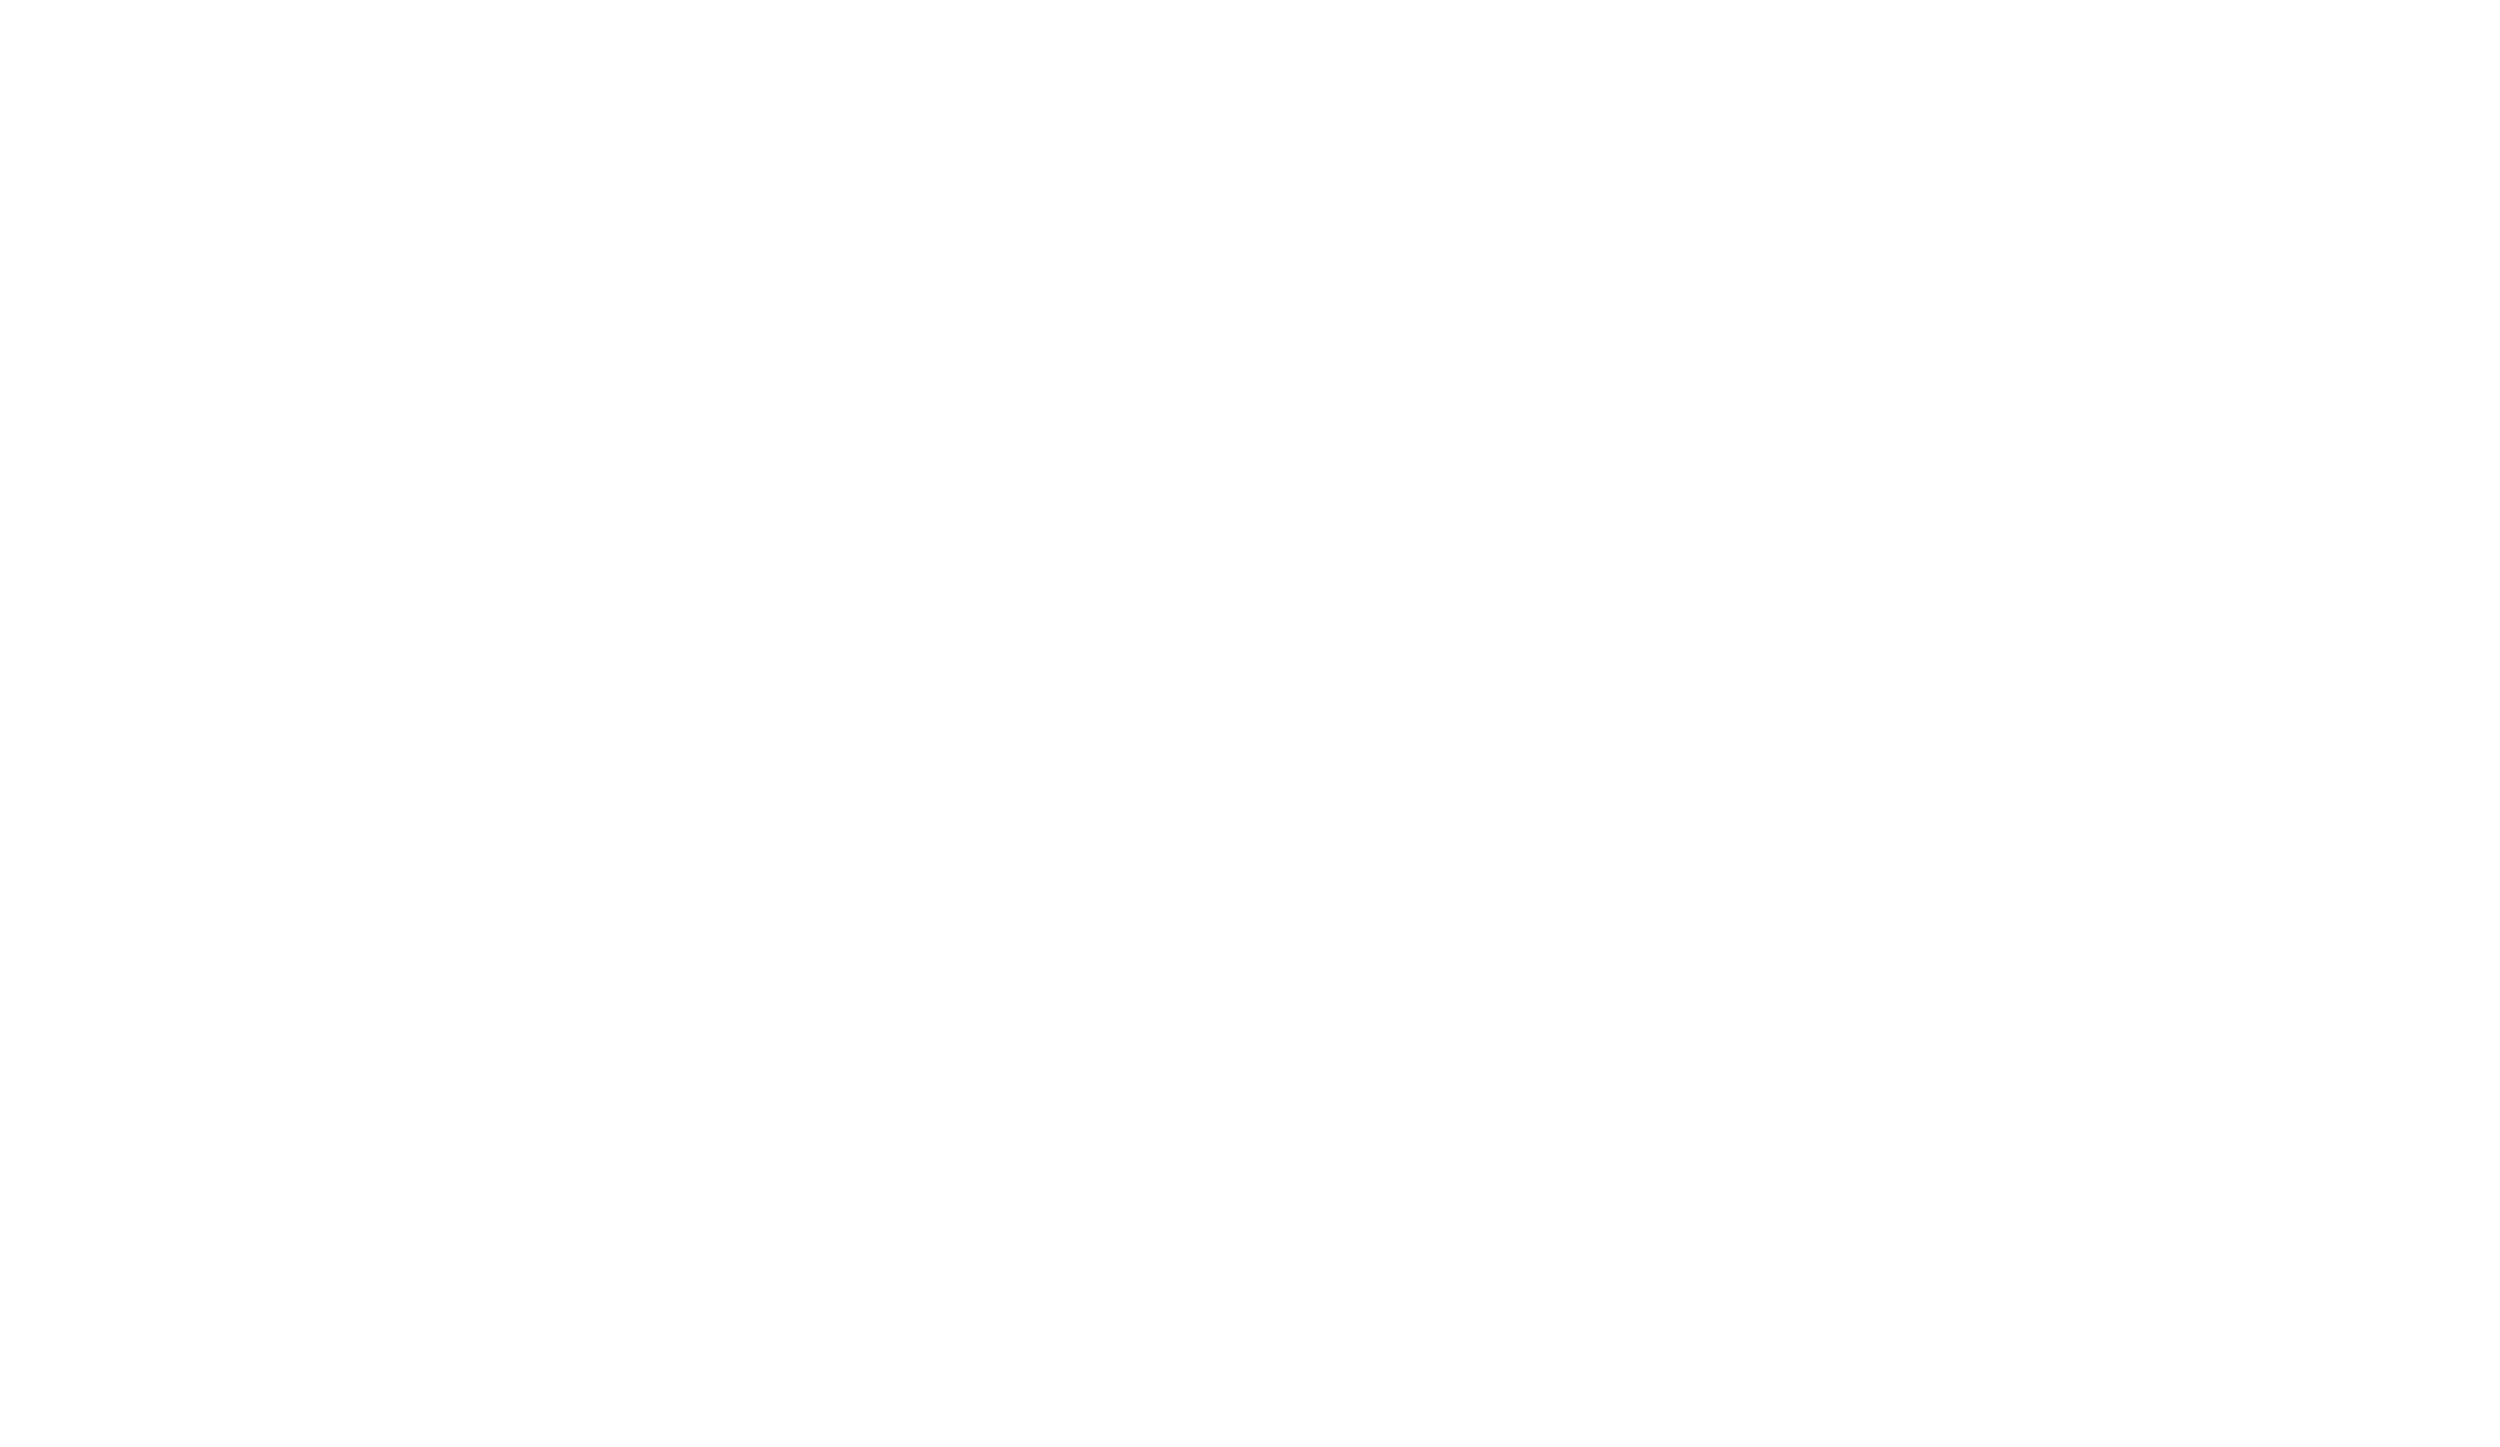 Boys & Girls Clubs of Boston holds 130th anniversary dinner – Bill